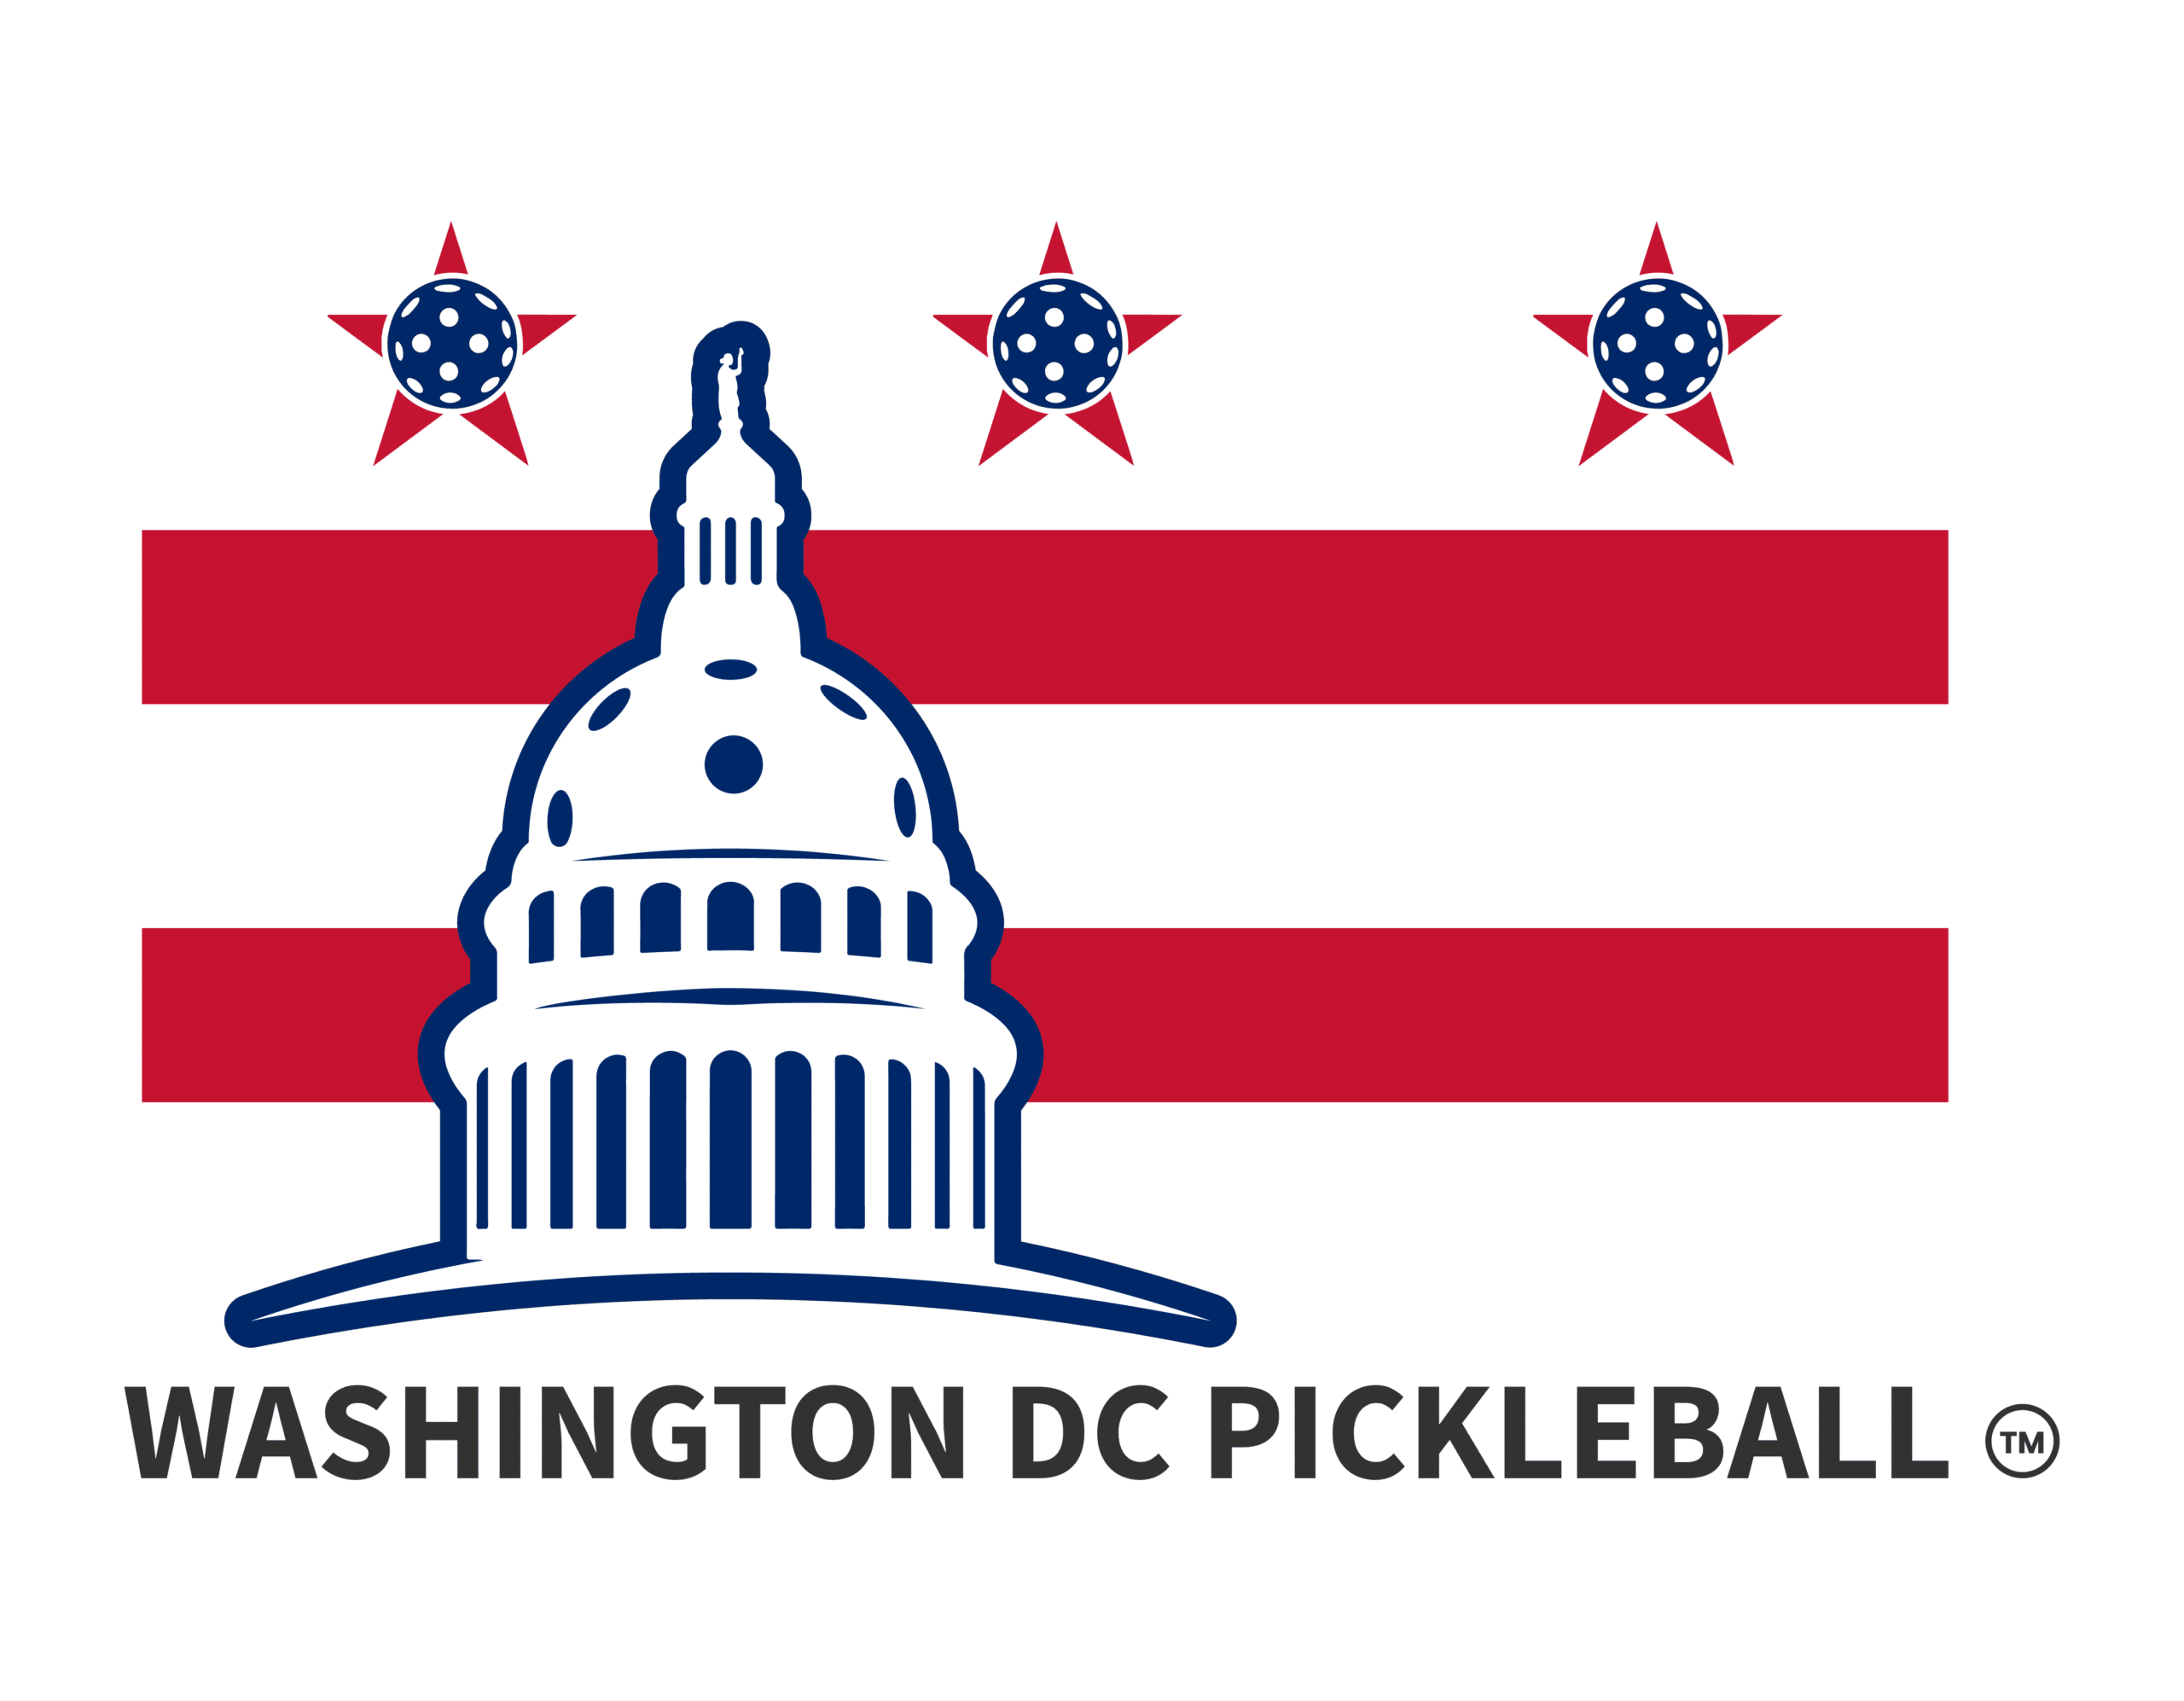 Washington DC Pickleball Club trademarked logo